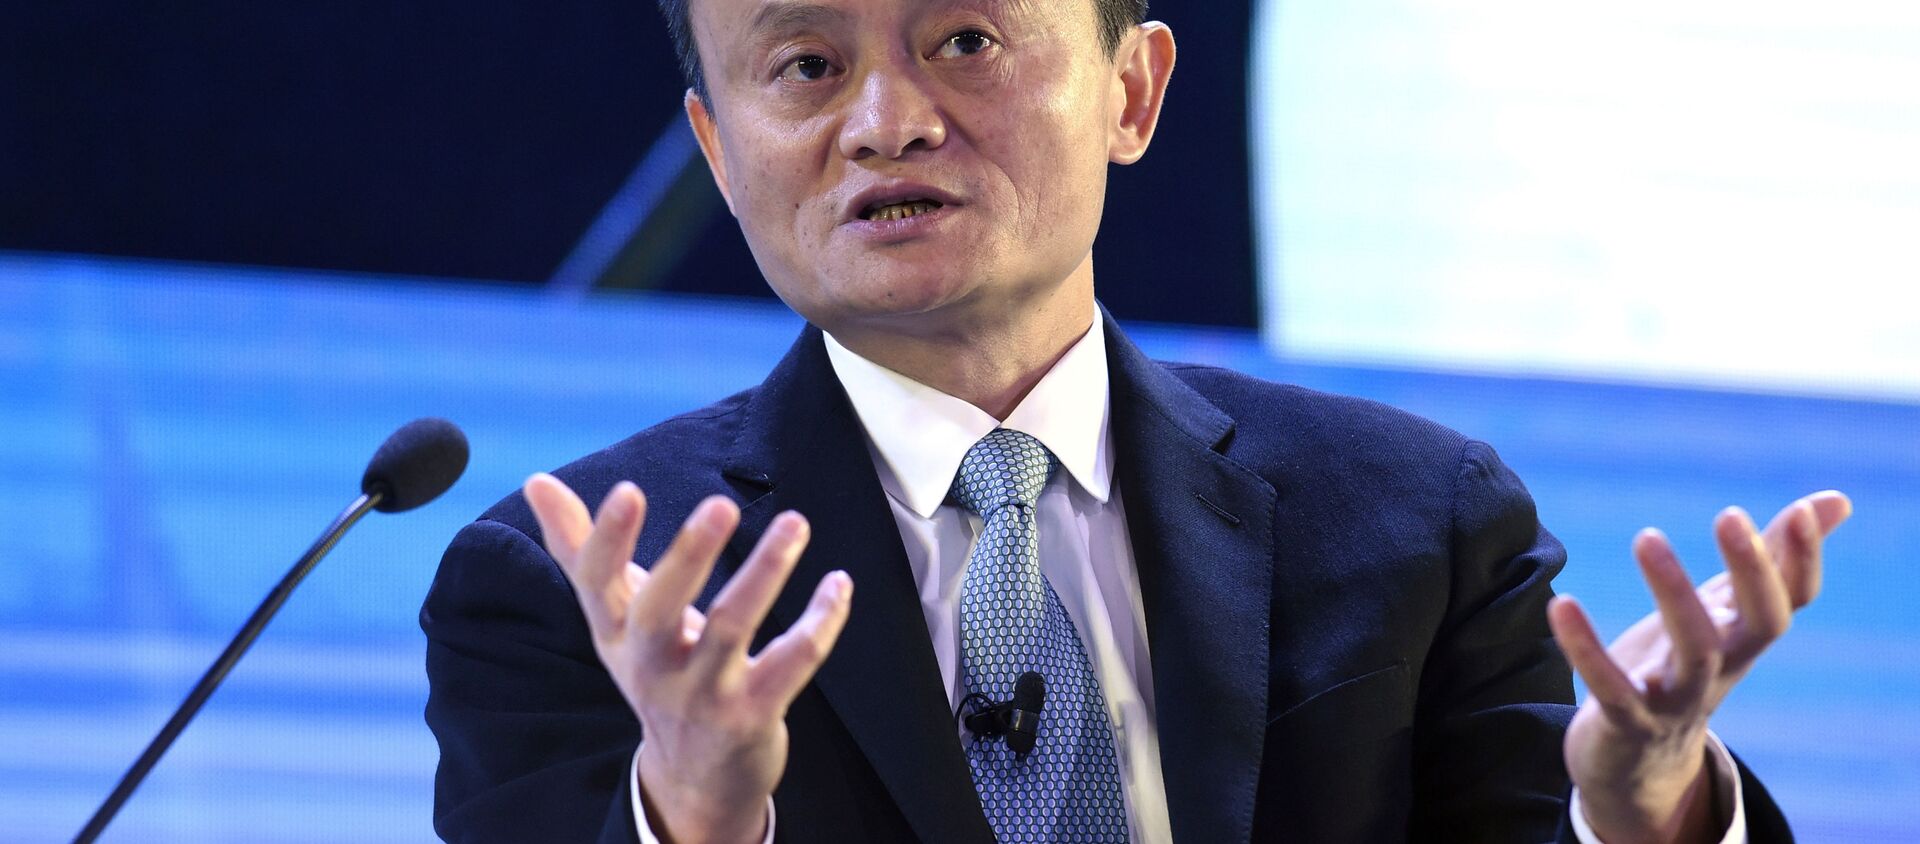 Người sáng lập Alibaba Jack Ma. - Sputnik Việt Nam, 1920, 29.04.2021